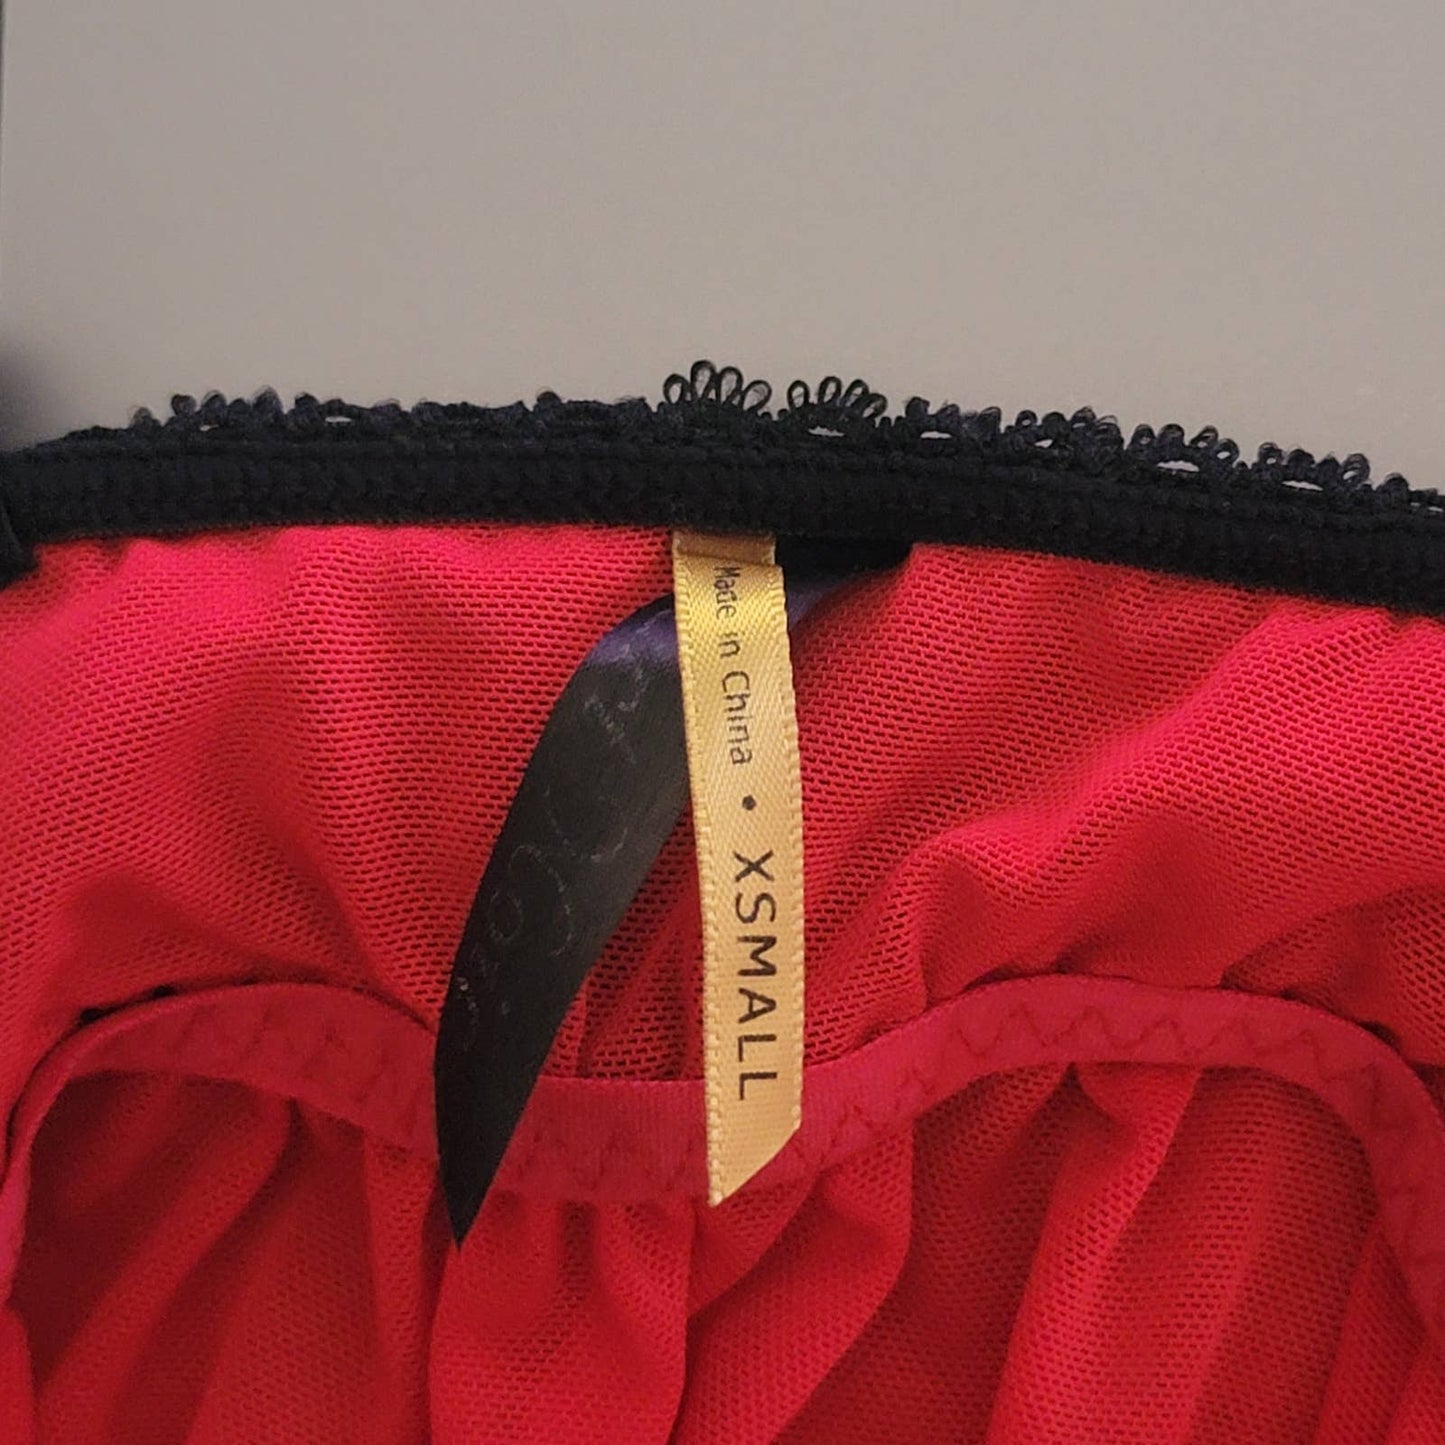 Tart Noir Lingerie Red Lace Babydoll Chemis Dress Gown